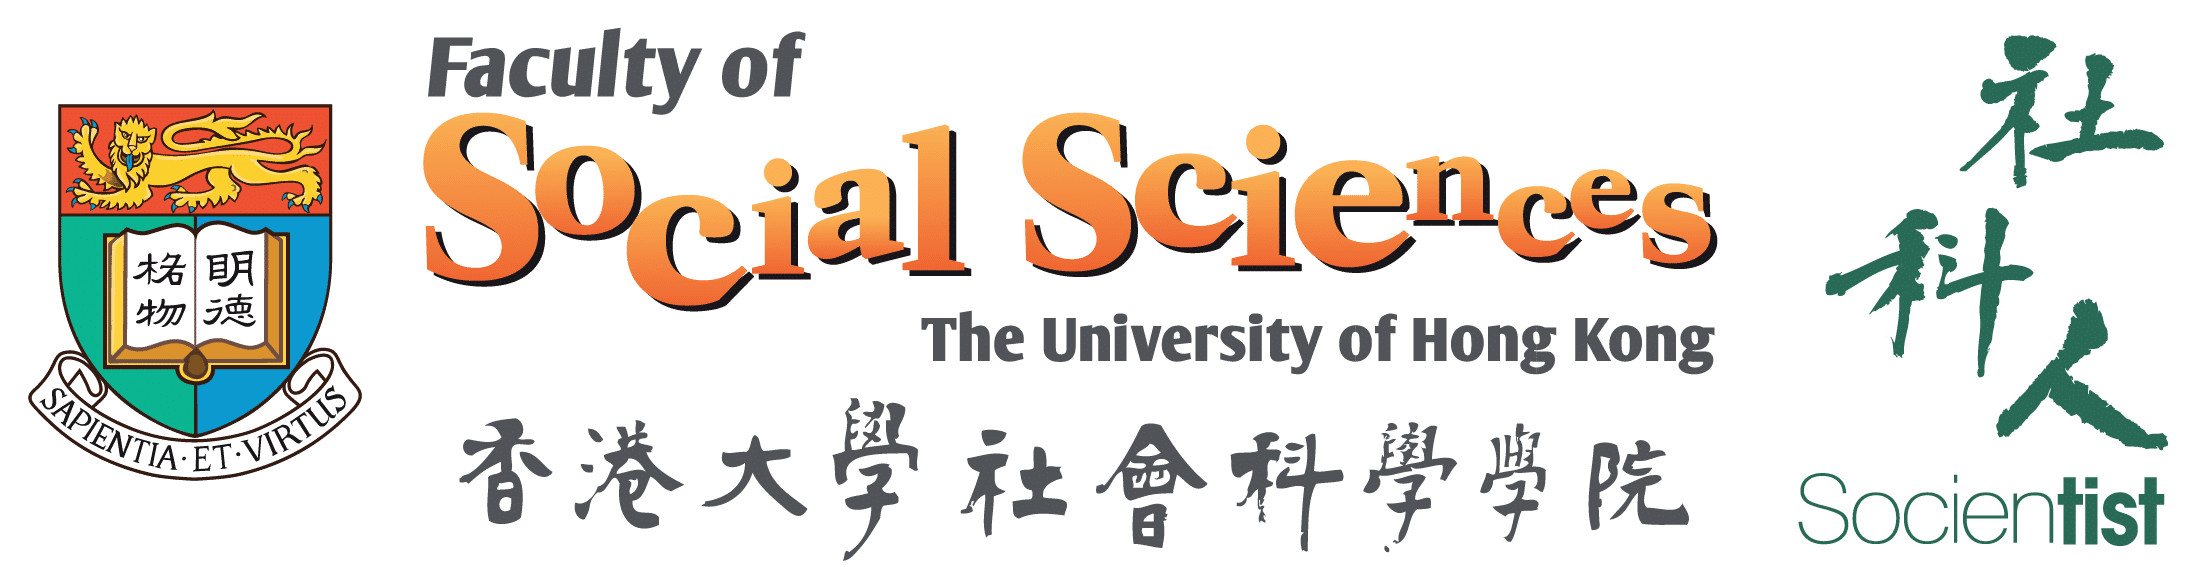 Faculty of Social Science Logo